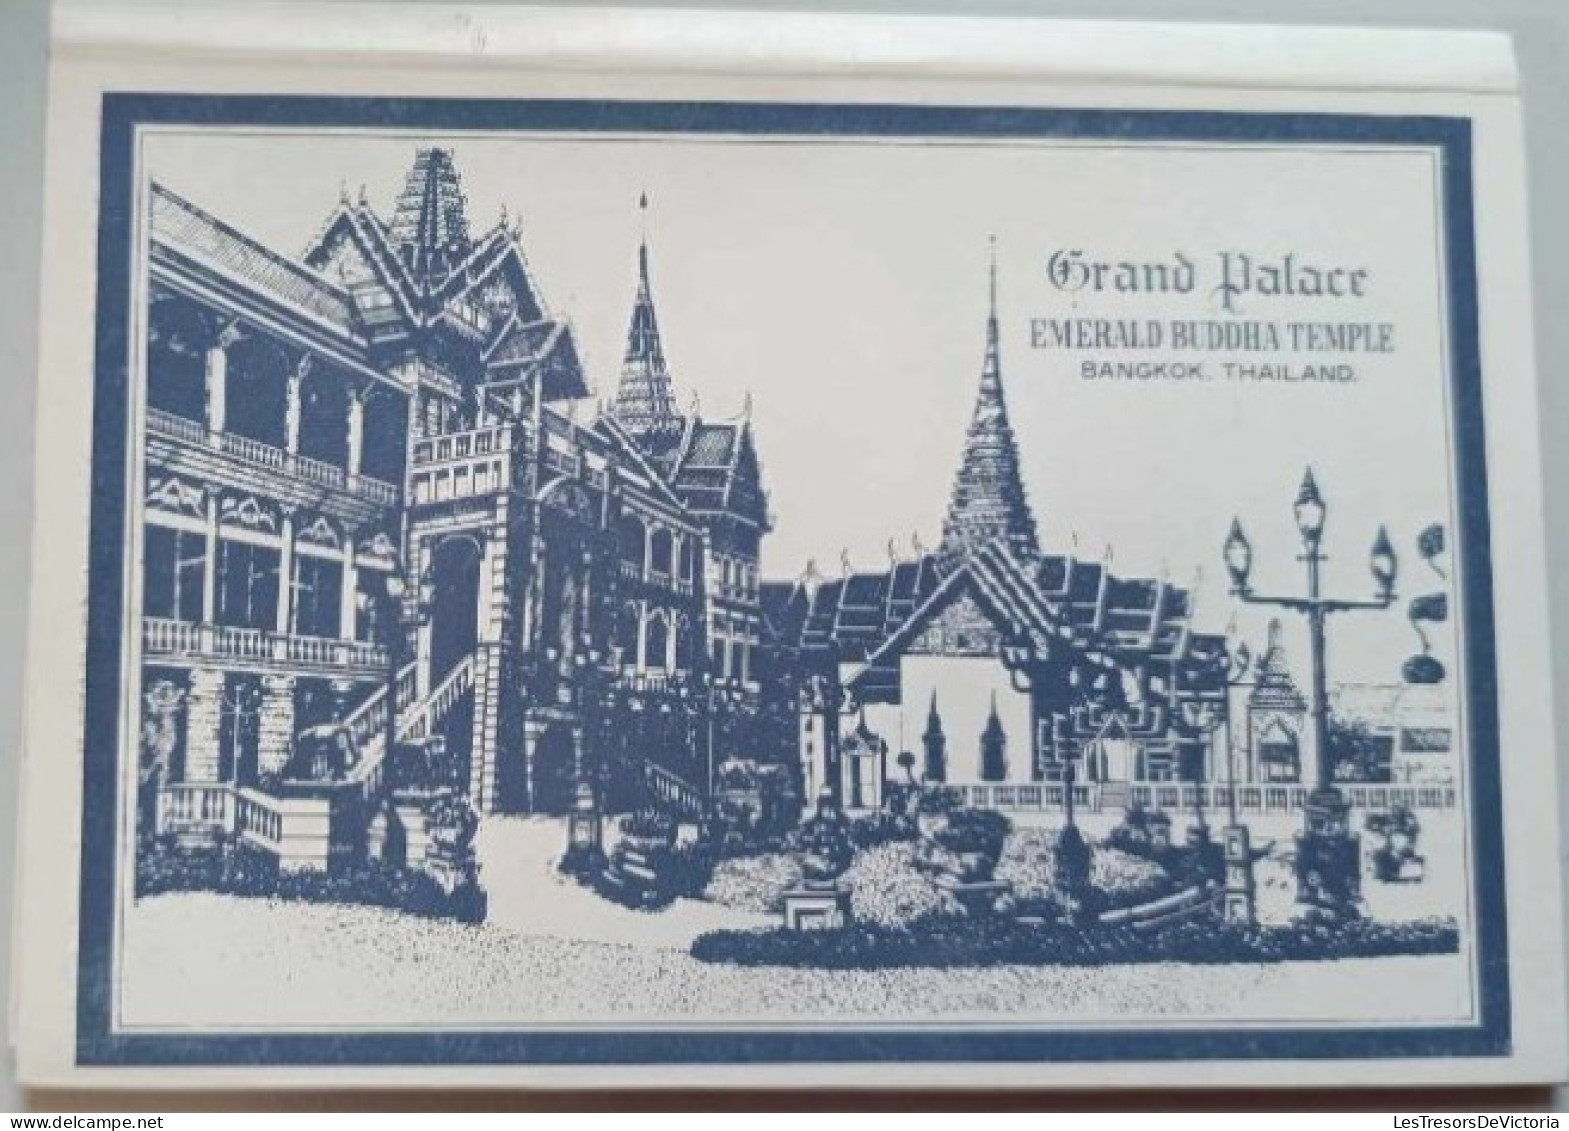 Carnet De Cartes Complet - Thaïlande - Bongkok - Emerald Buddha Temple - Grand Palace - Carte Postale Ancienne - Thailand